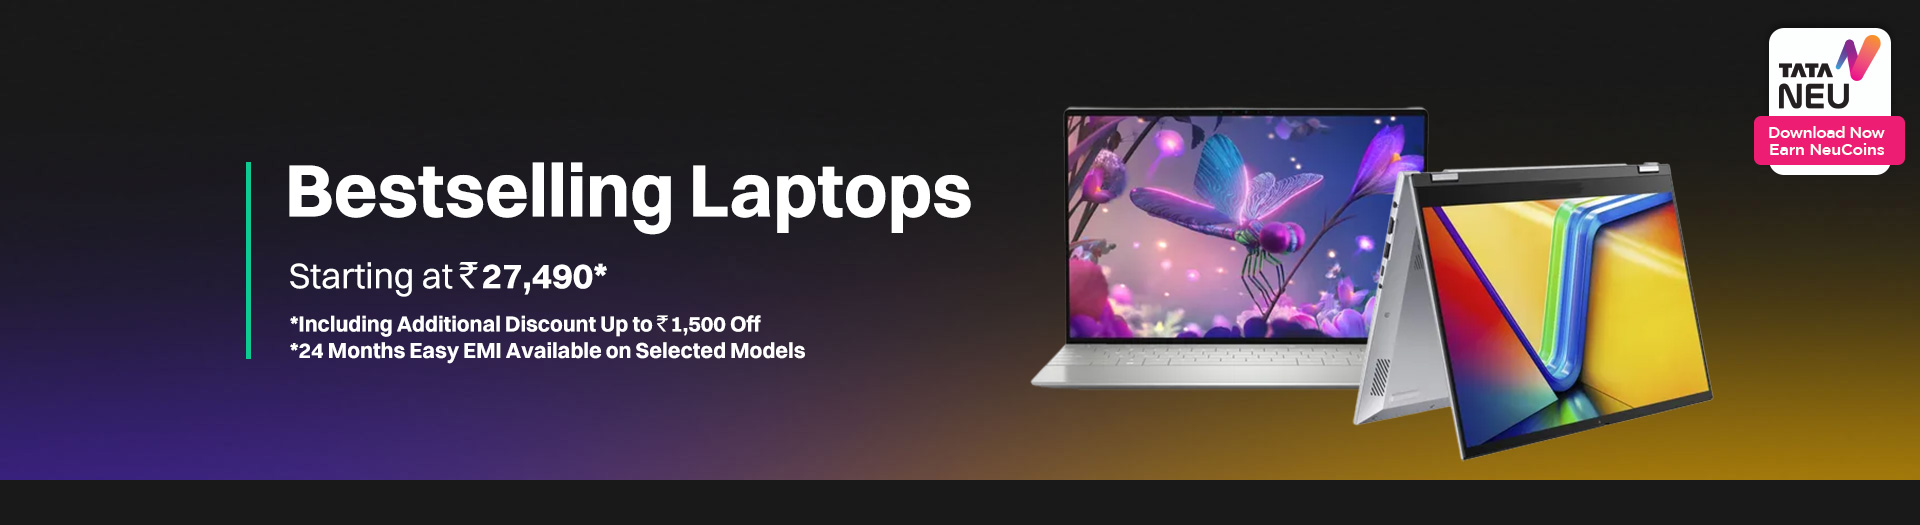 croma.com - Bestselling laptops